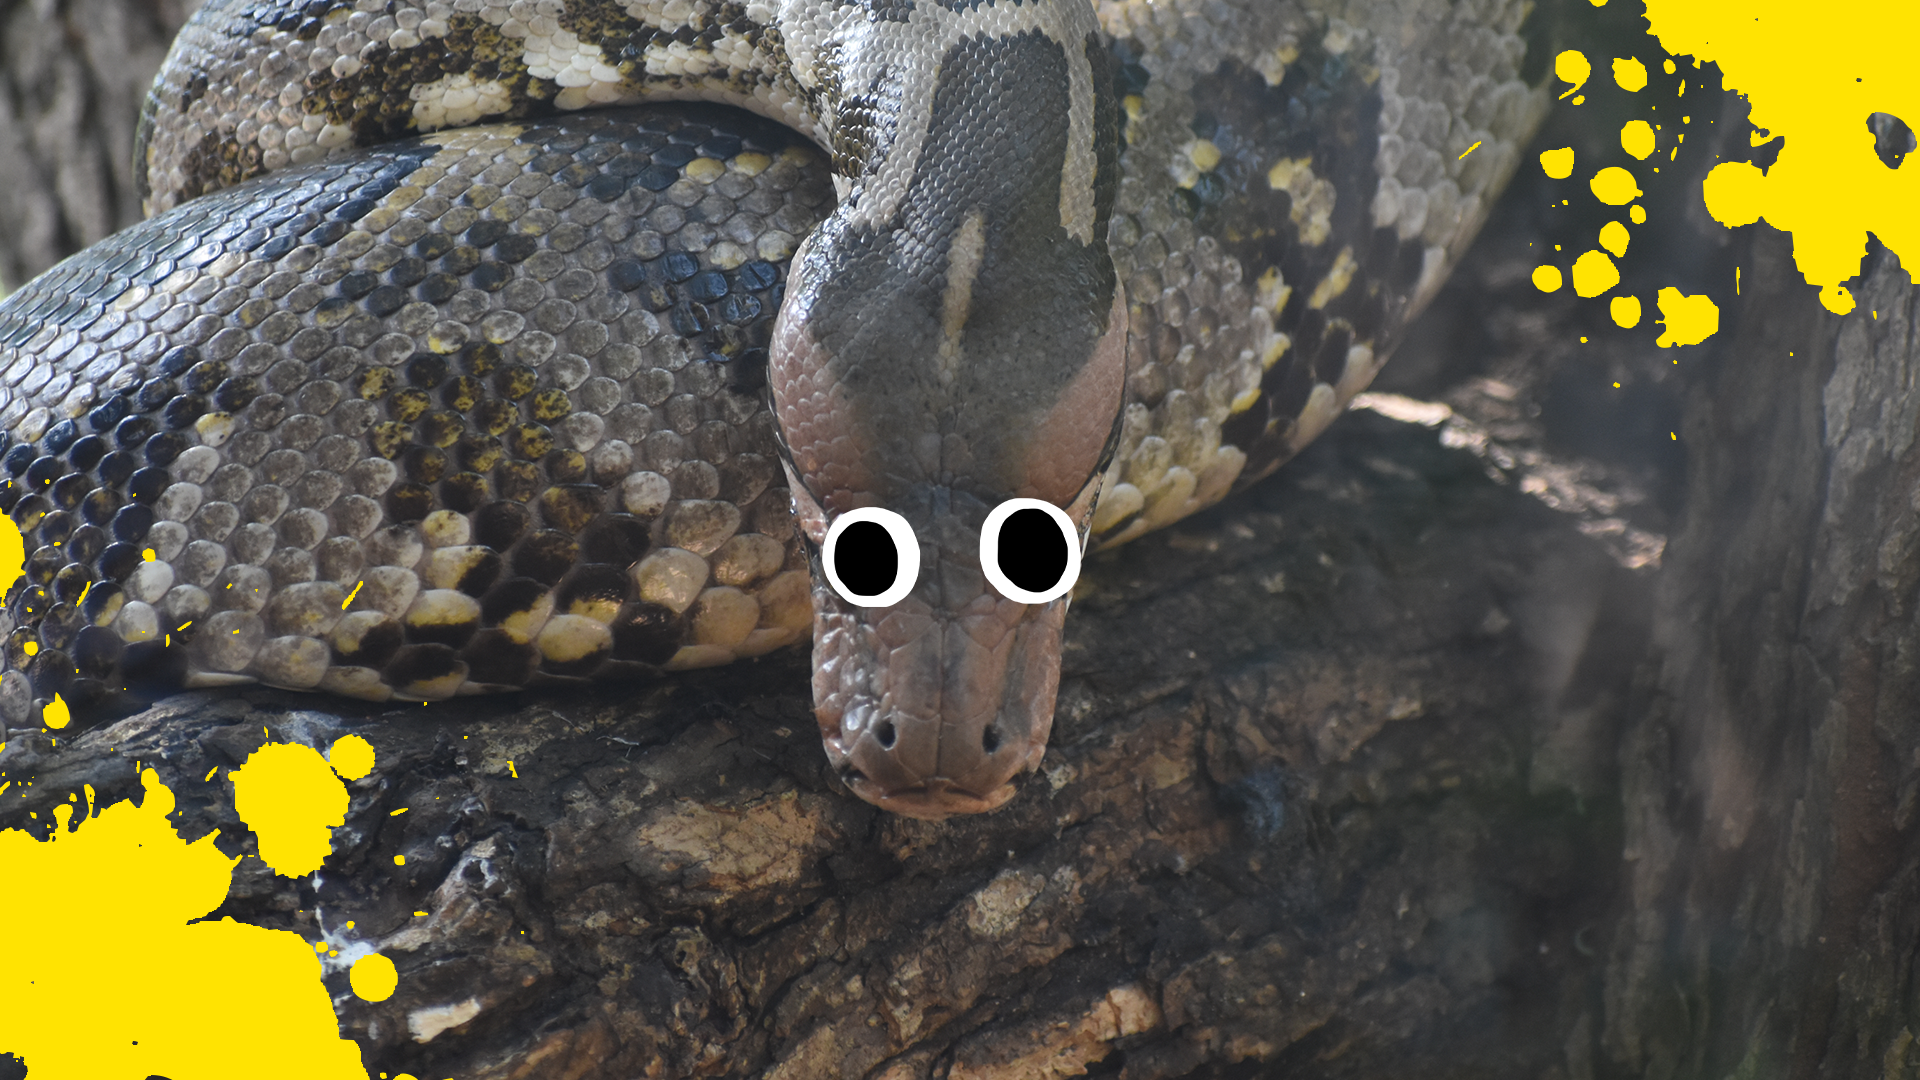 Goofy snake with splats